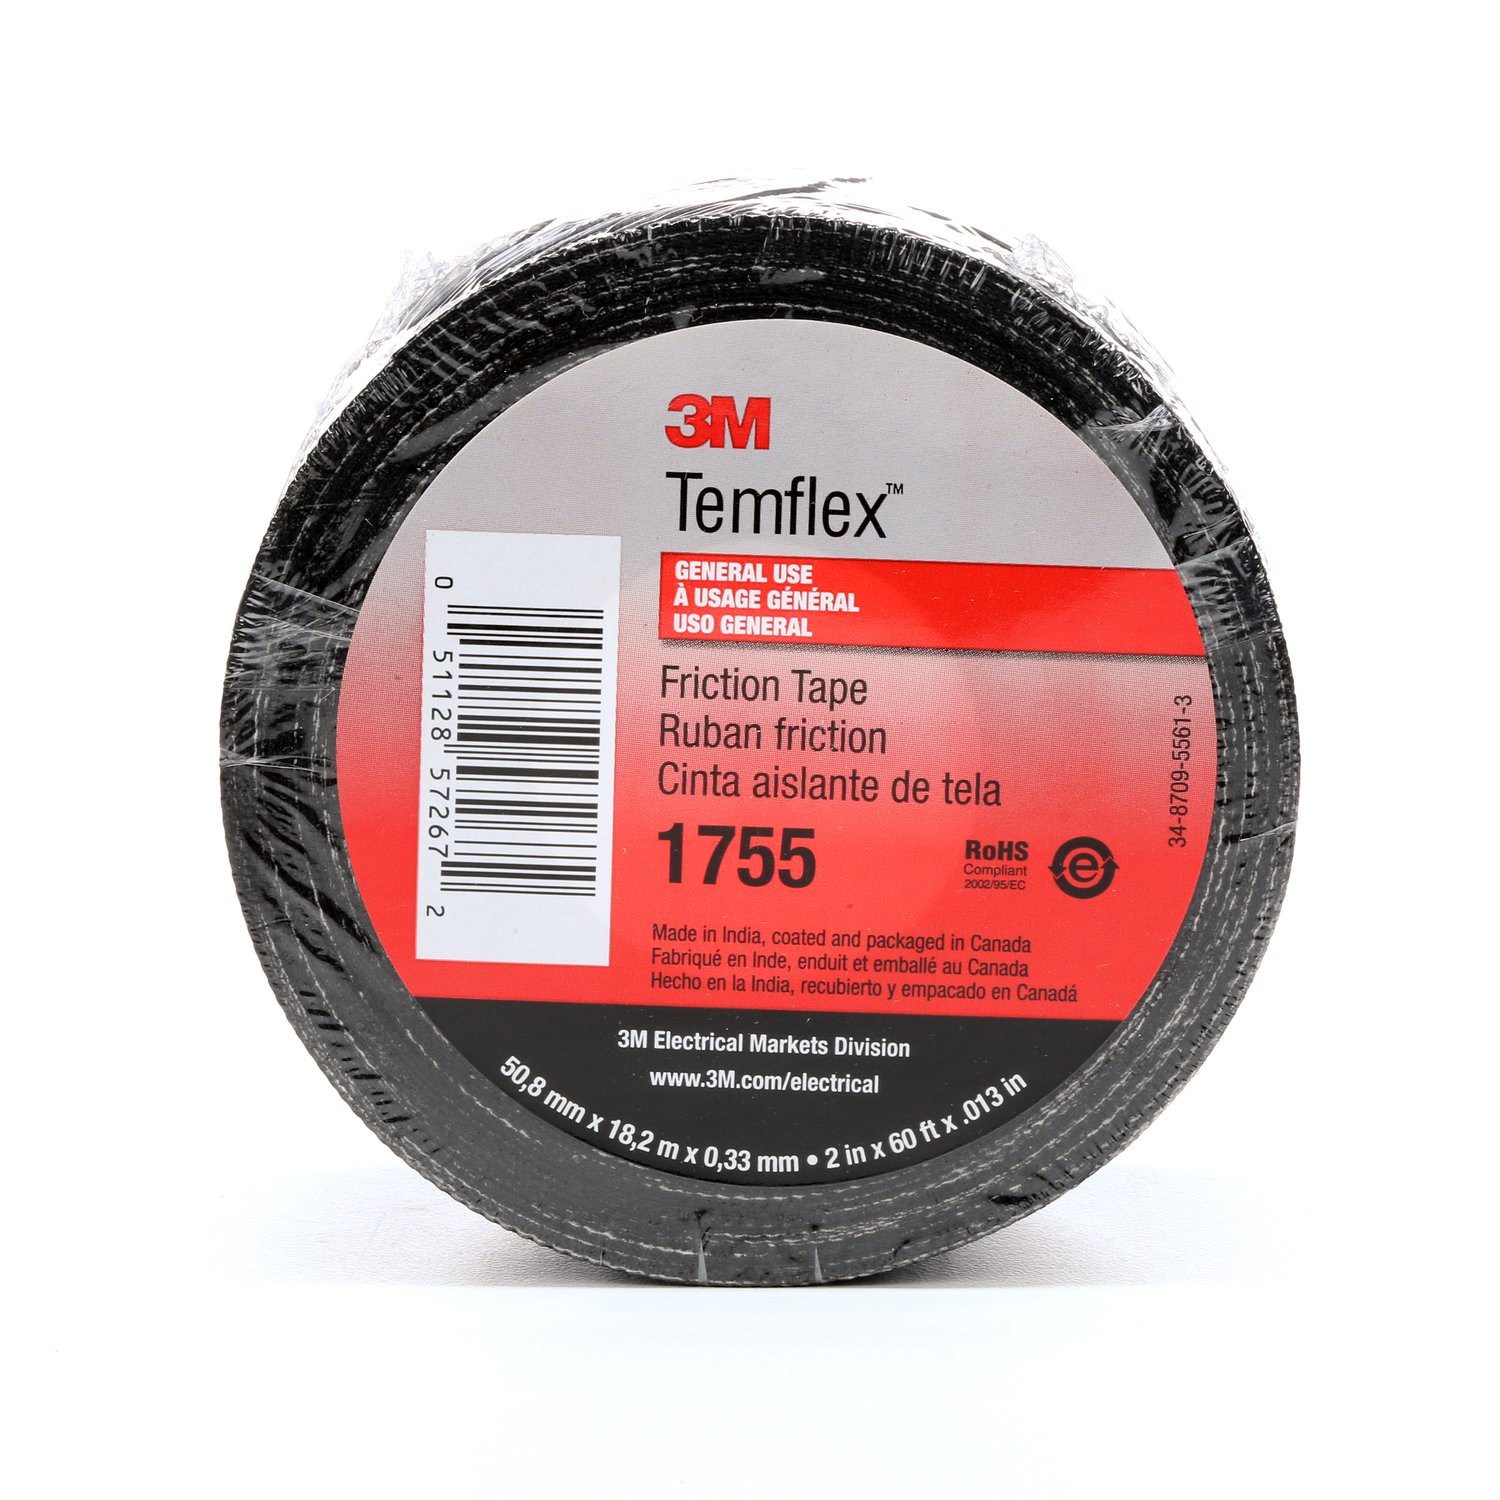 7100016886 - 3M Temflex Cotton Friction Tape 1755, 2 in x 60 ft, Black, 30
rolls/Case